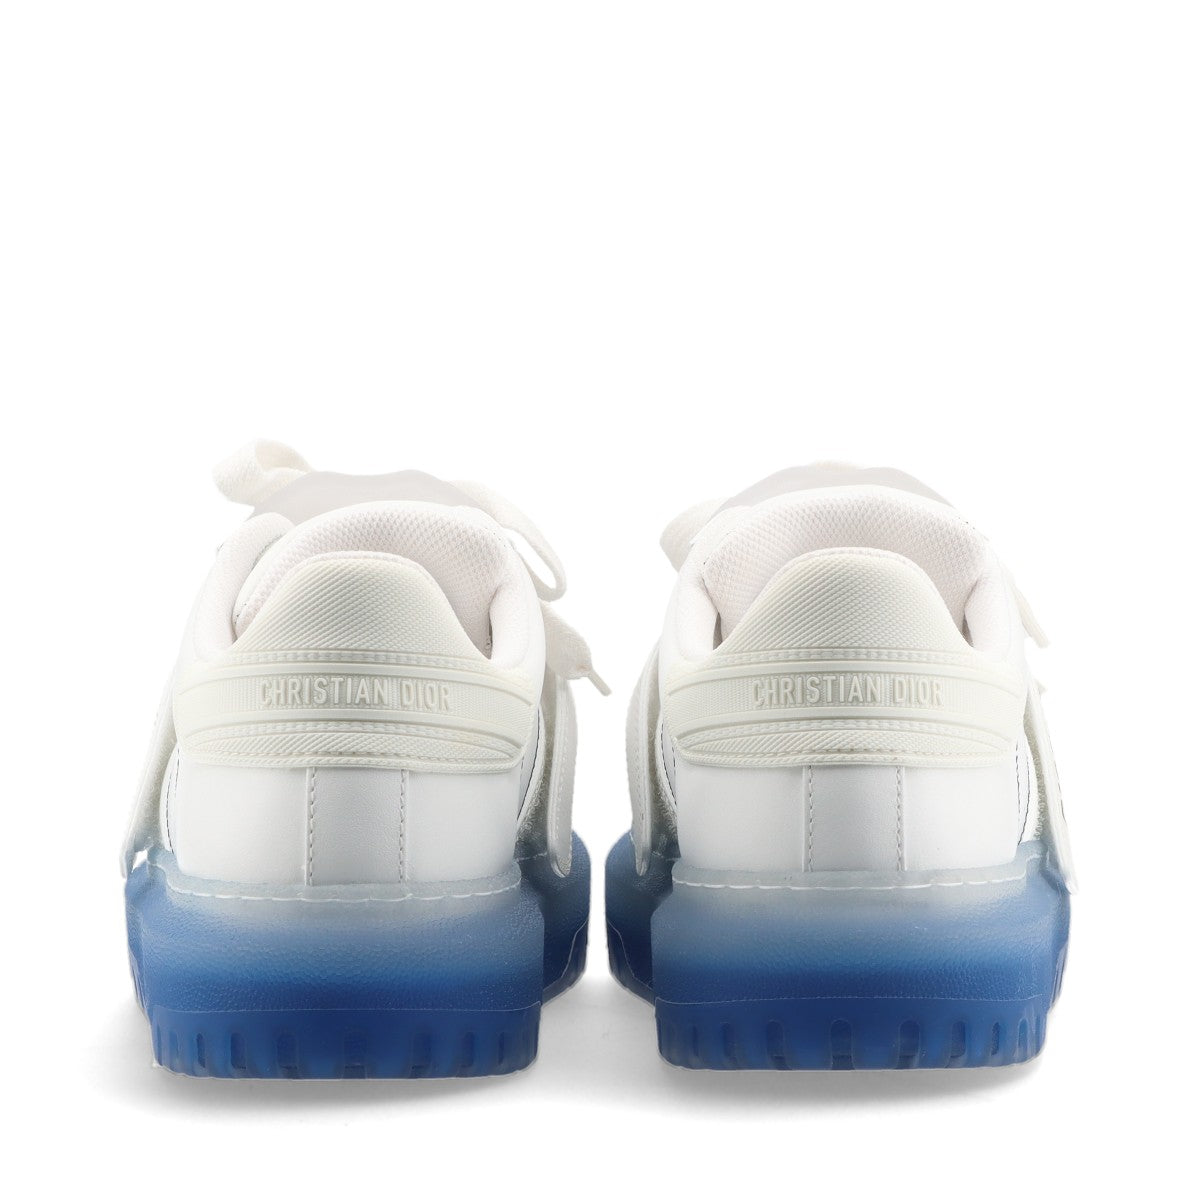 Chris Chandior DIOR-ID 皮革紫砂運動鞋 36.5 藍色×白色 Rement 繩索包